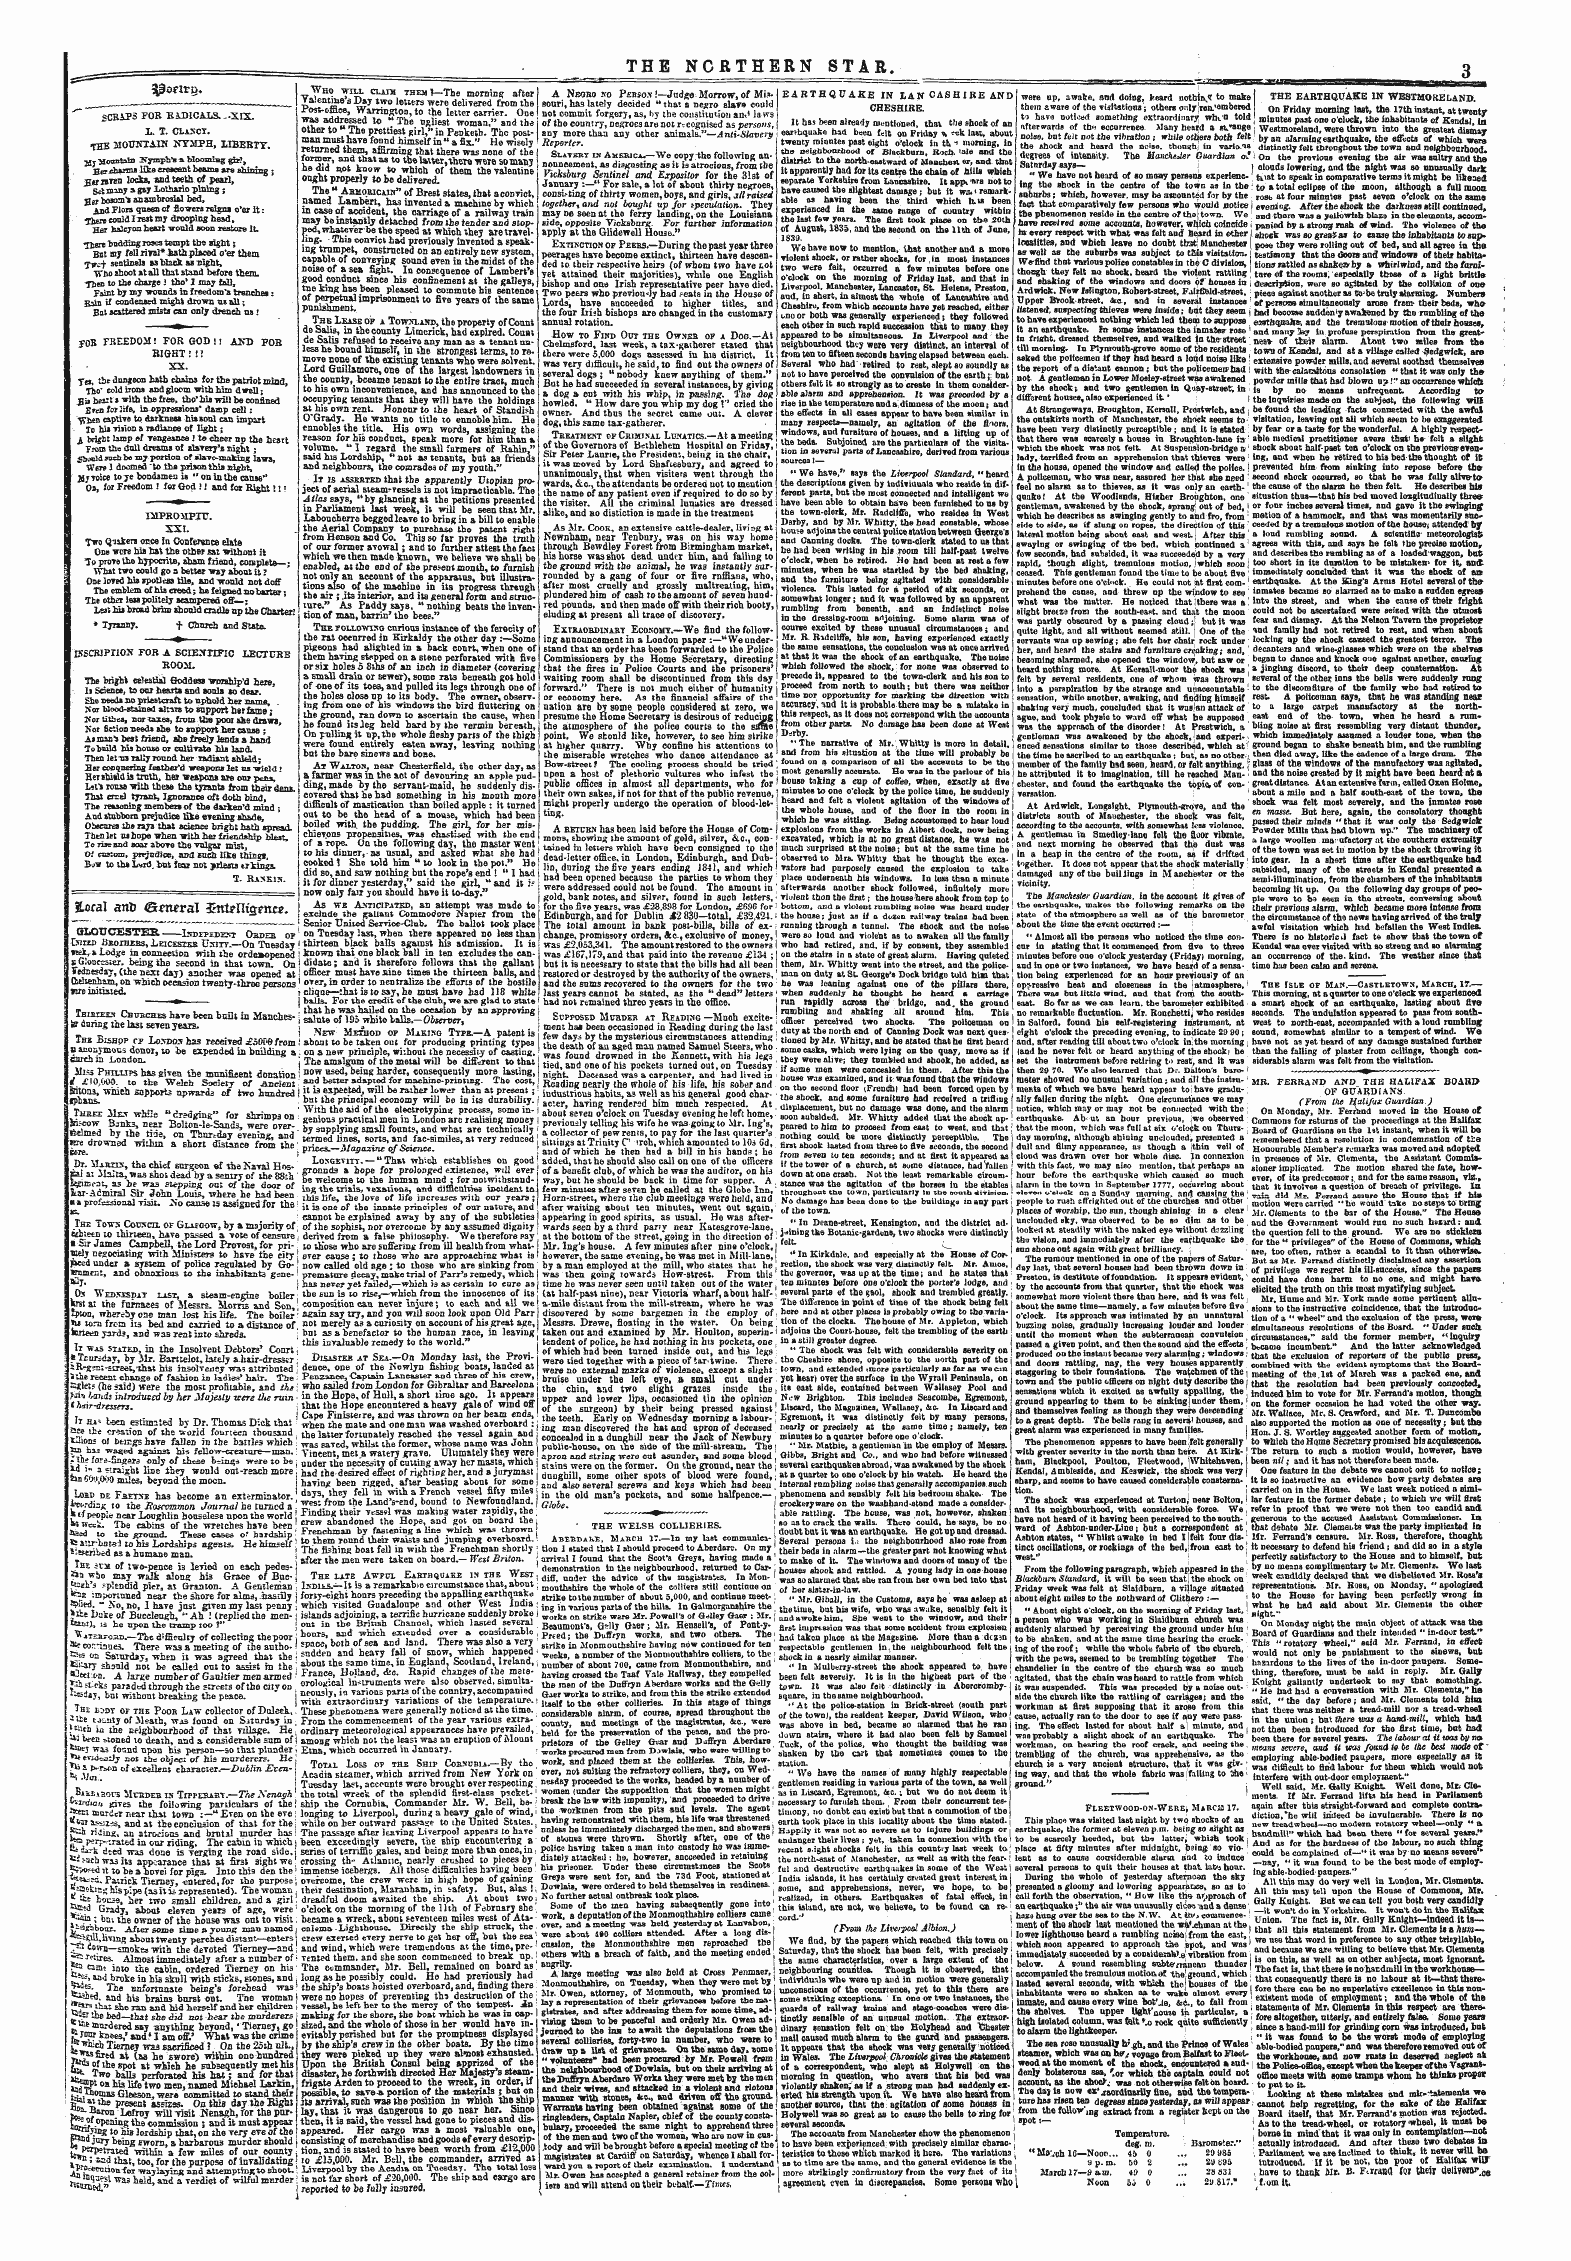 Northern Star (1837-1852): jS F Y, 5th edition - Lural Ariij General $Ttt*I%Rn«-